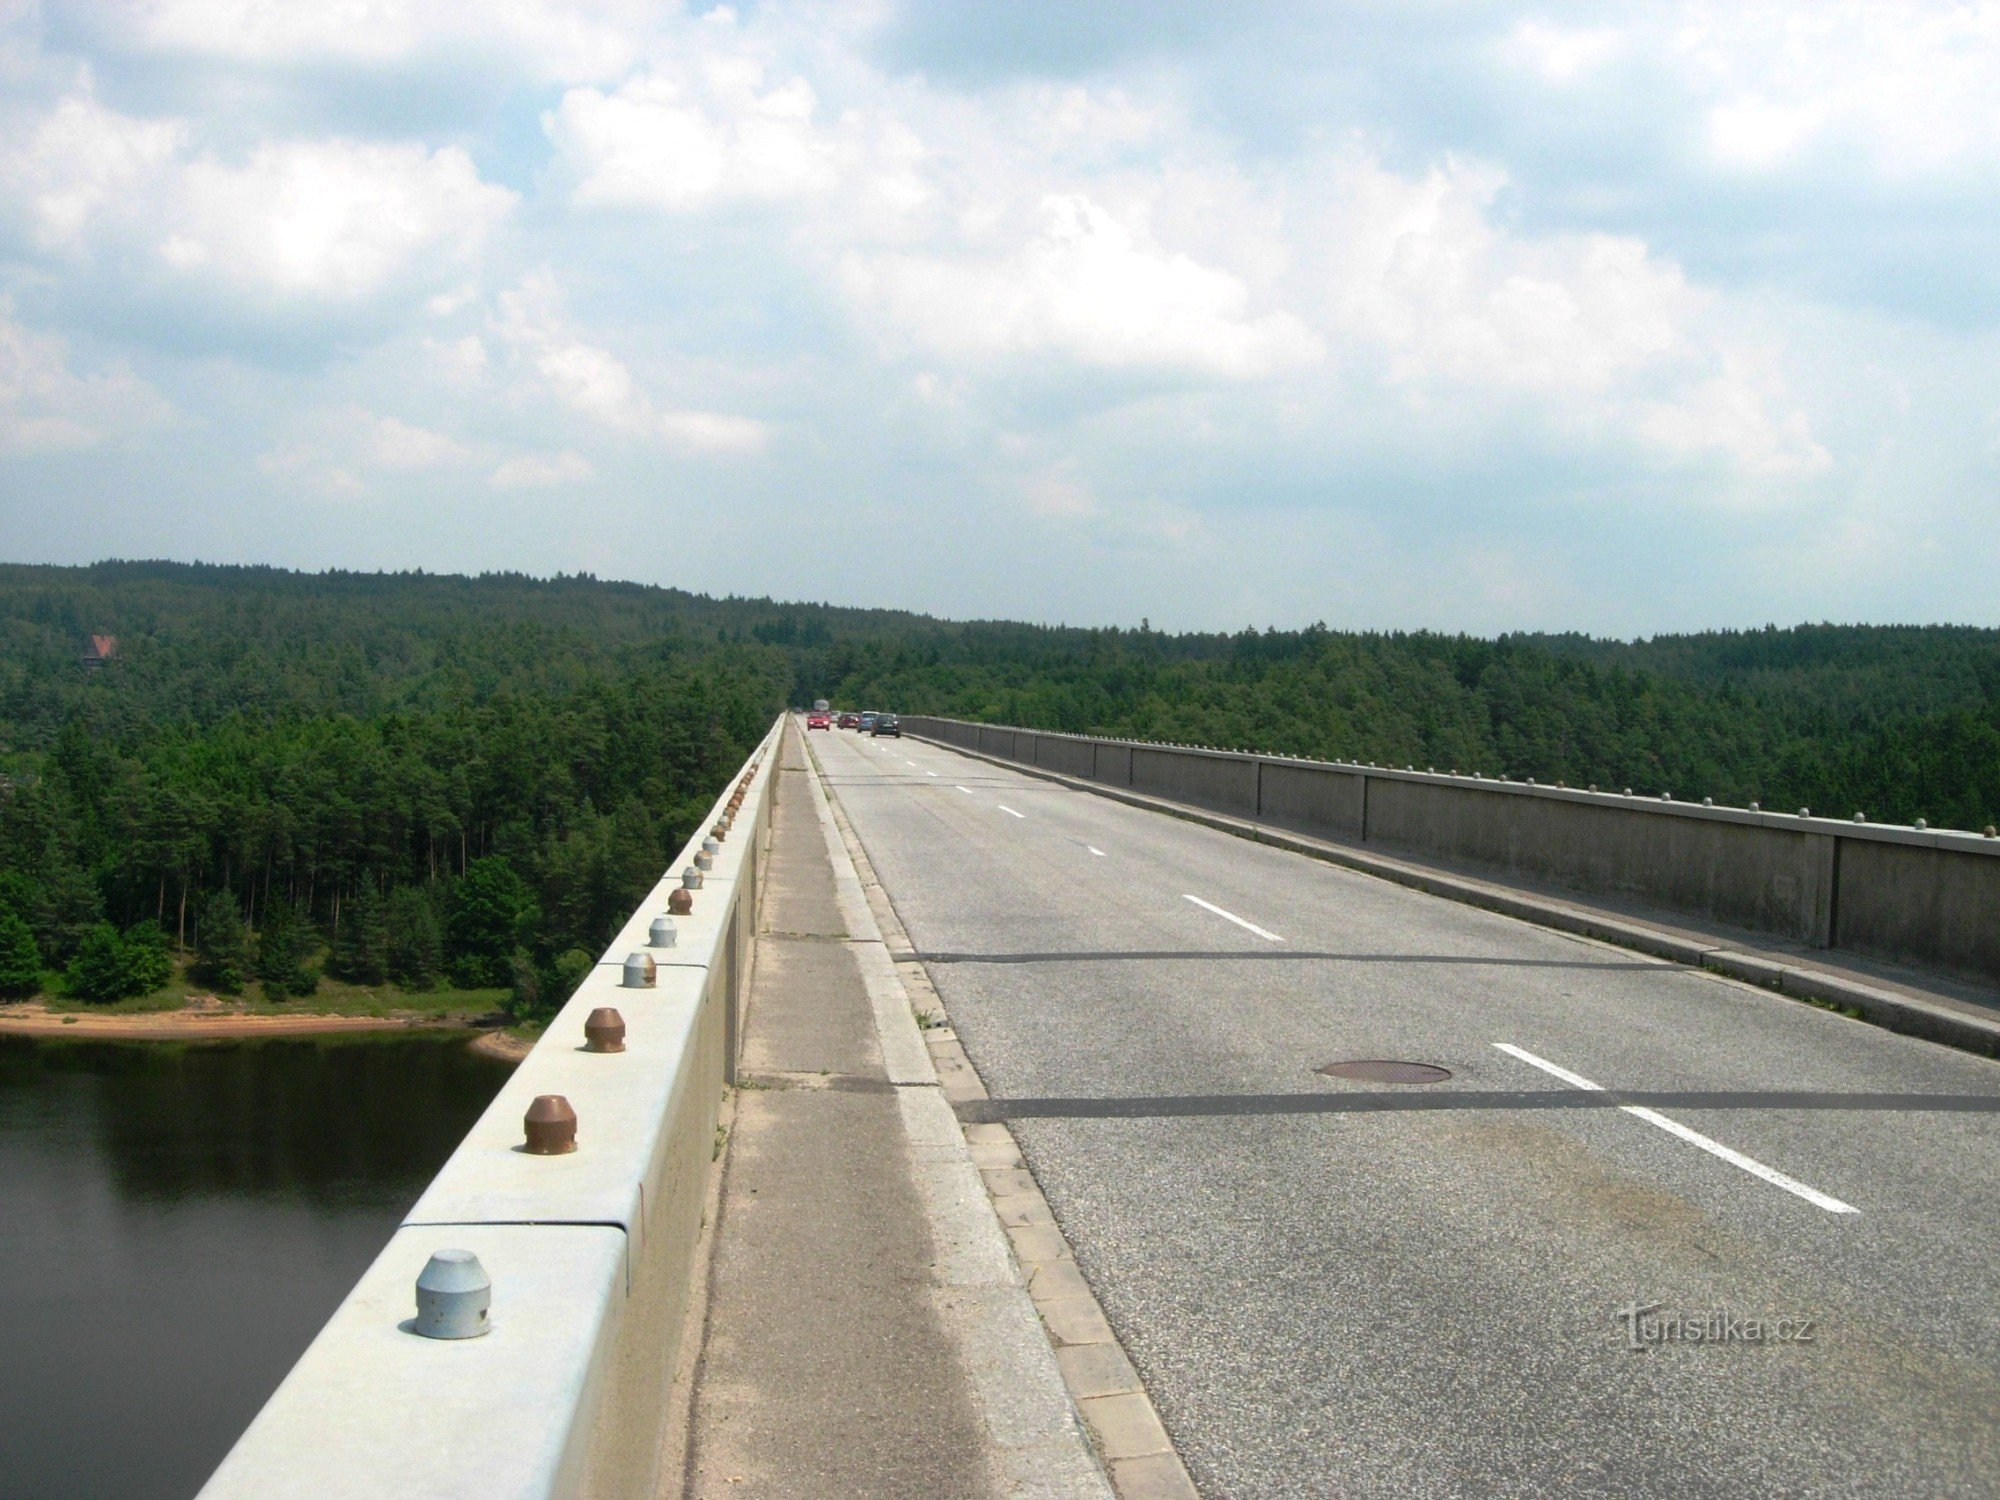 Bridge roadway